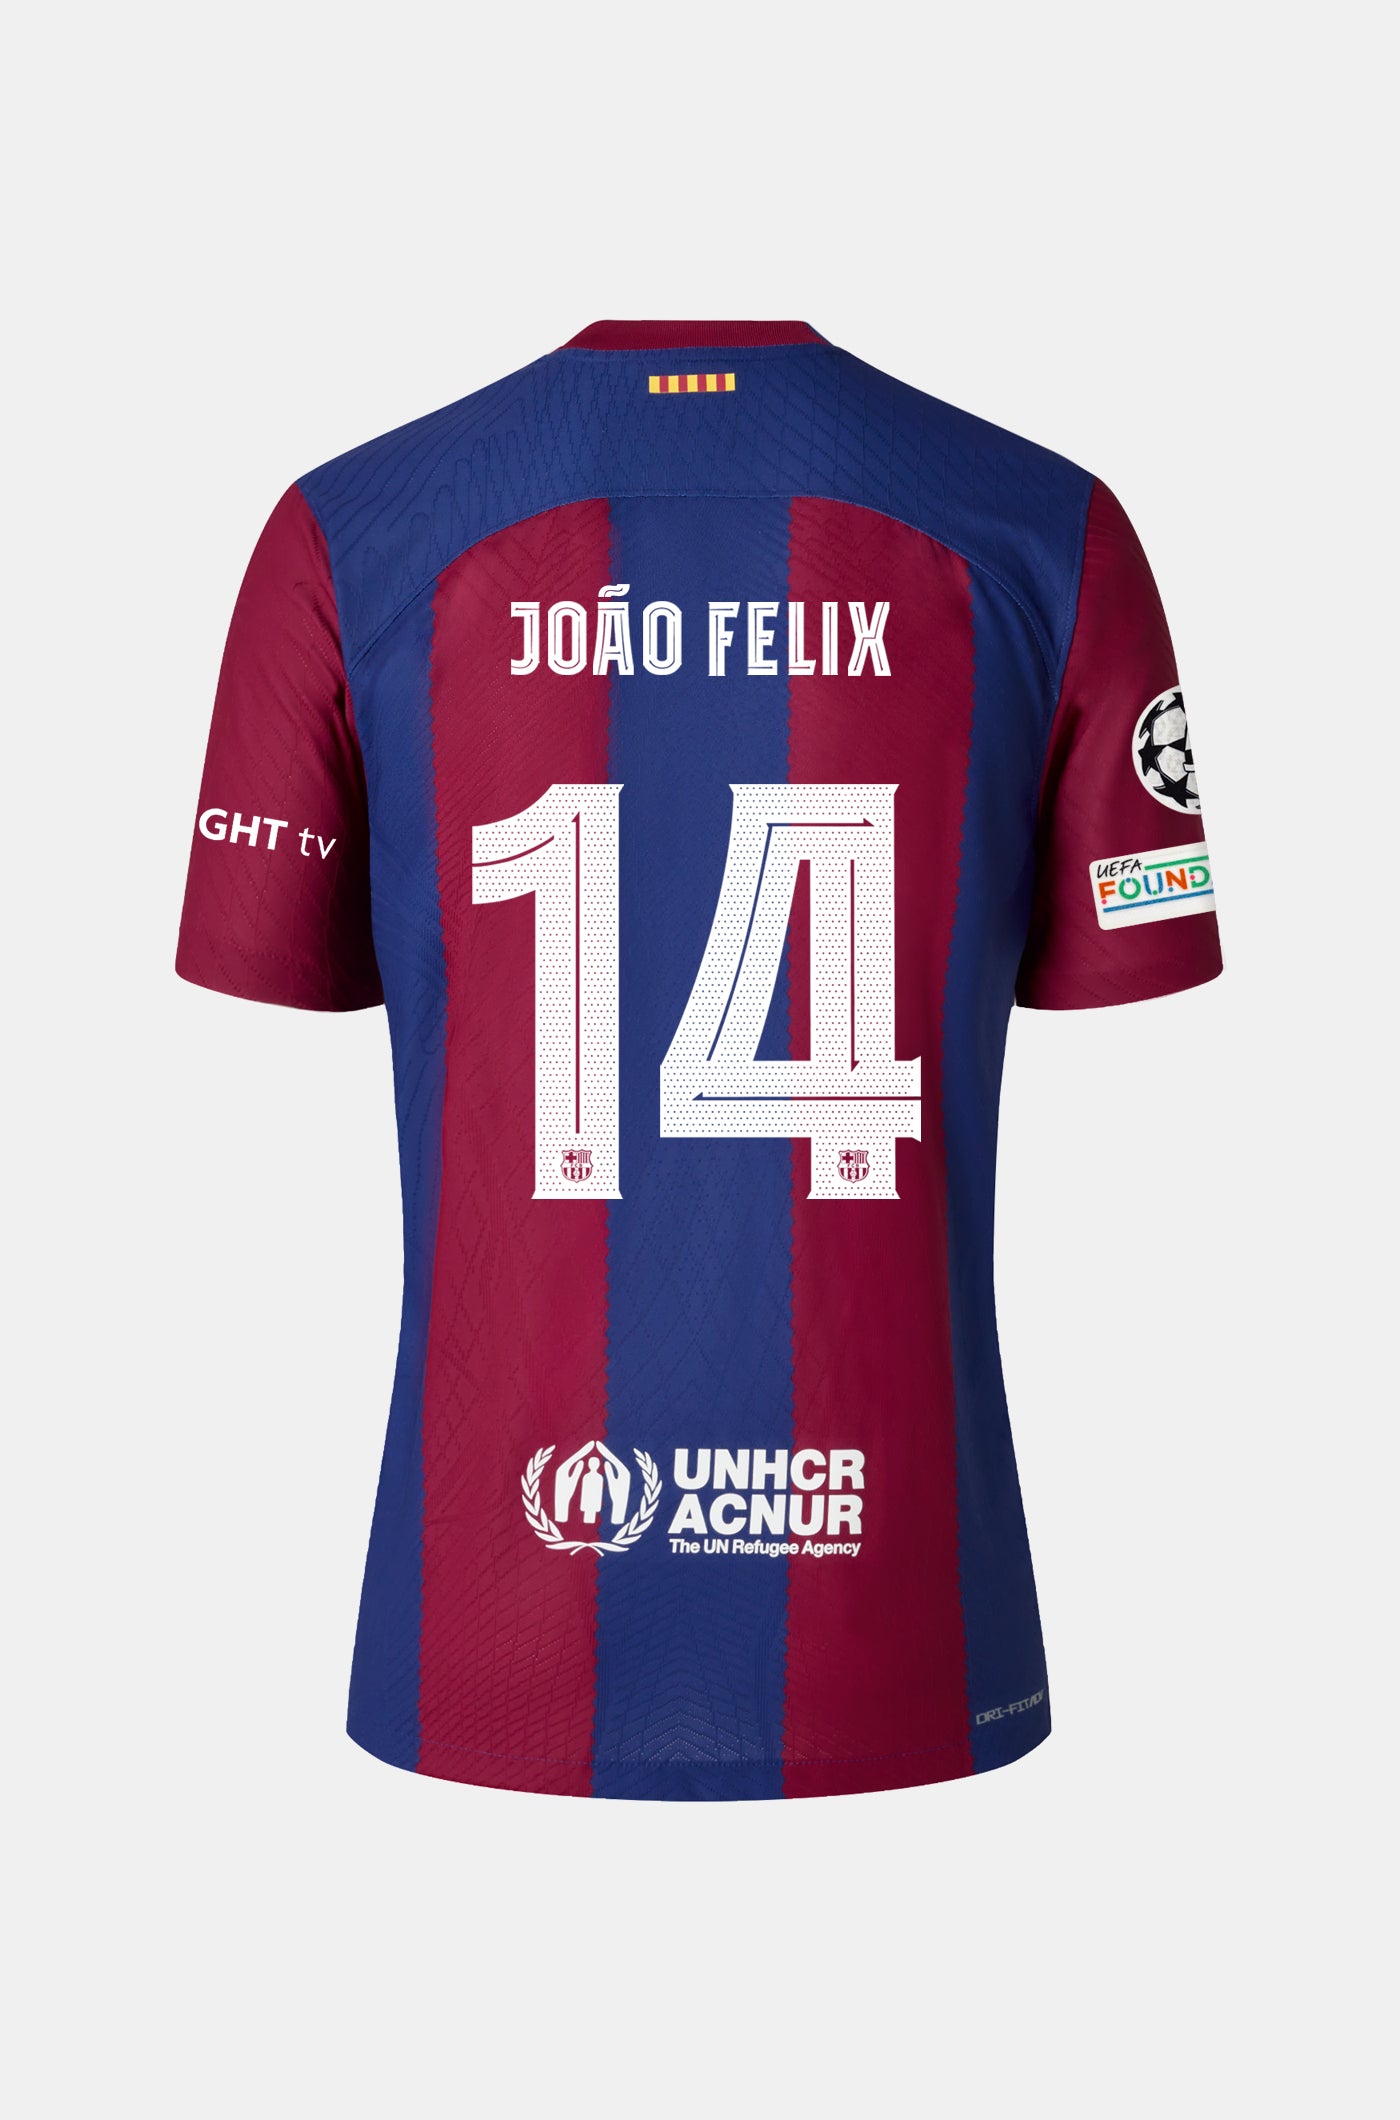 UCL FC Barcelona home shirt 23/24 Player's Edition  - JOÃO FELIX